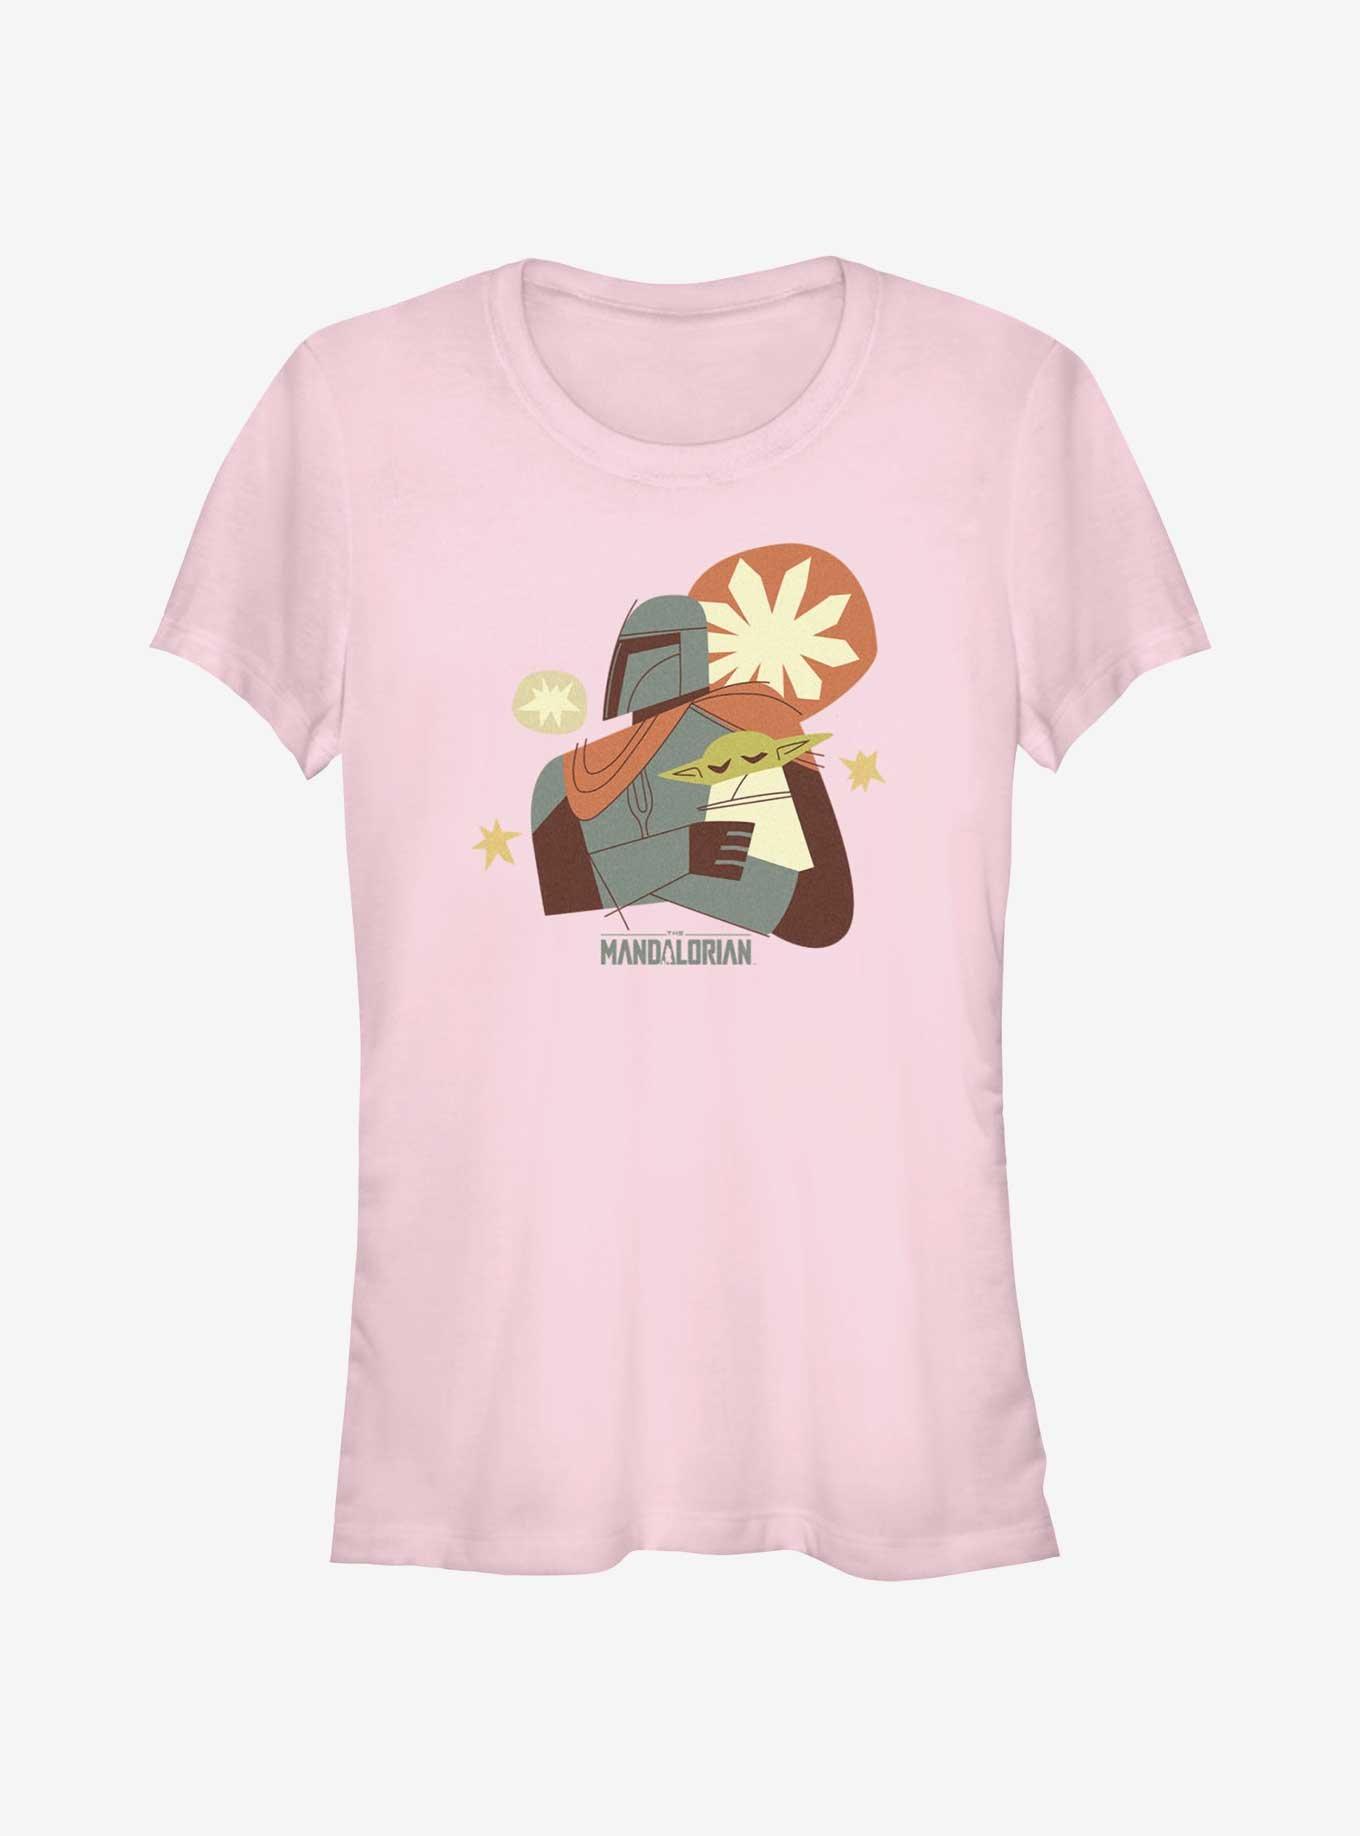 Star Wars The Mandalorian Mando & Sleepy Grogu Sketch Girls T-Shirt